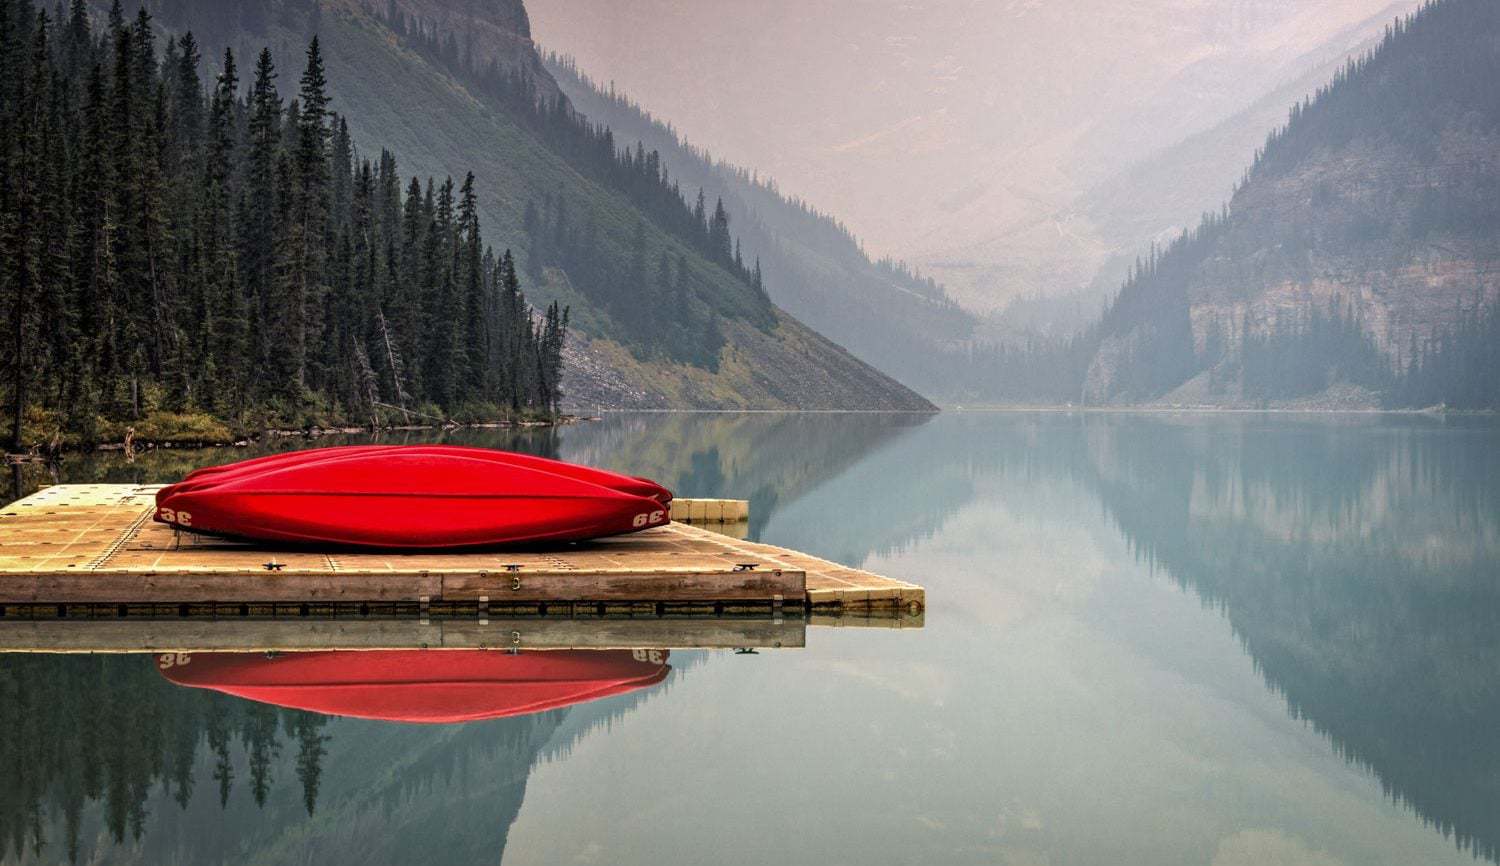 Red Canoe on blue lake in banff. 